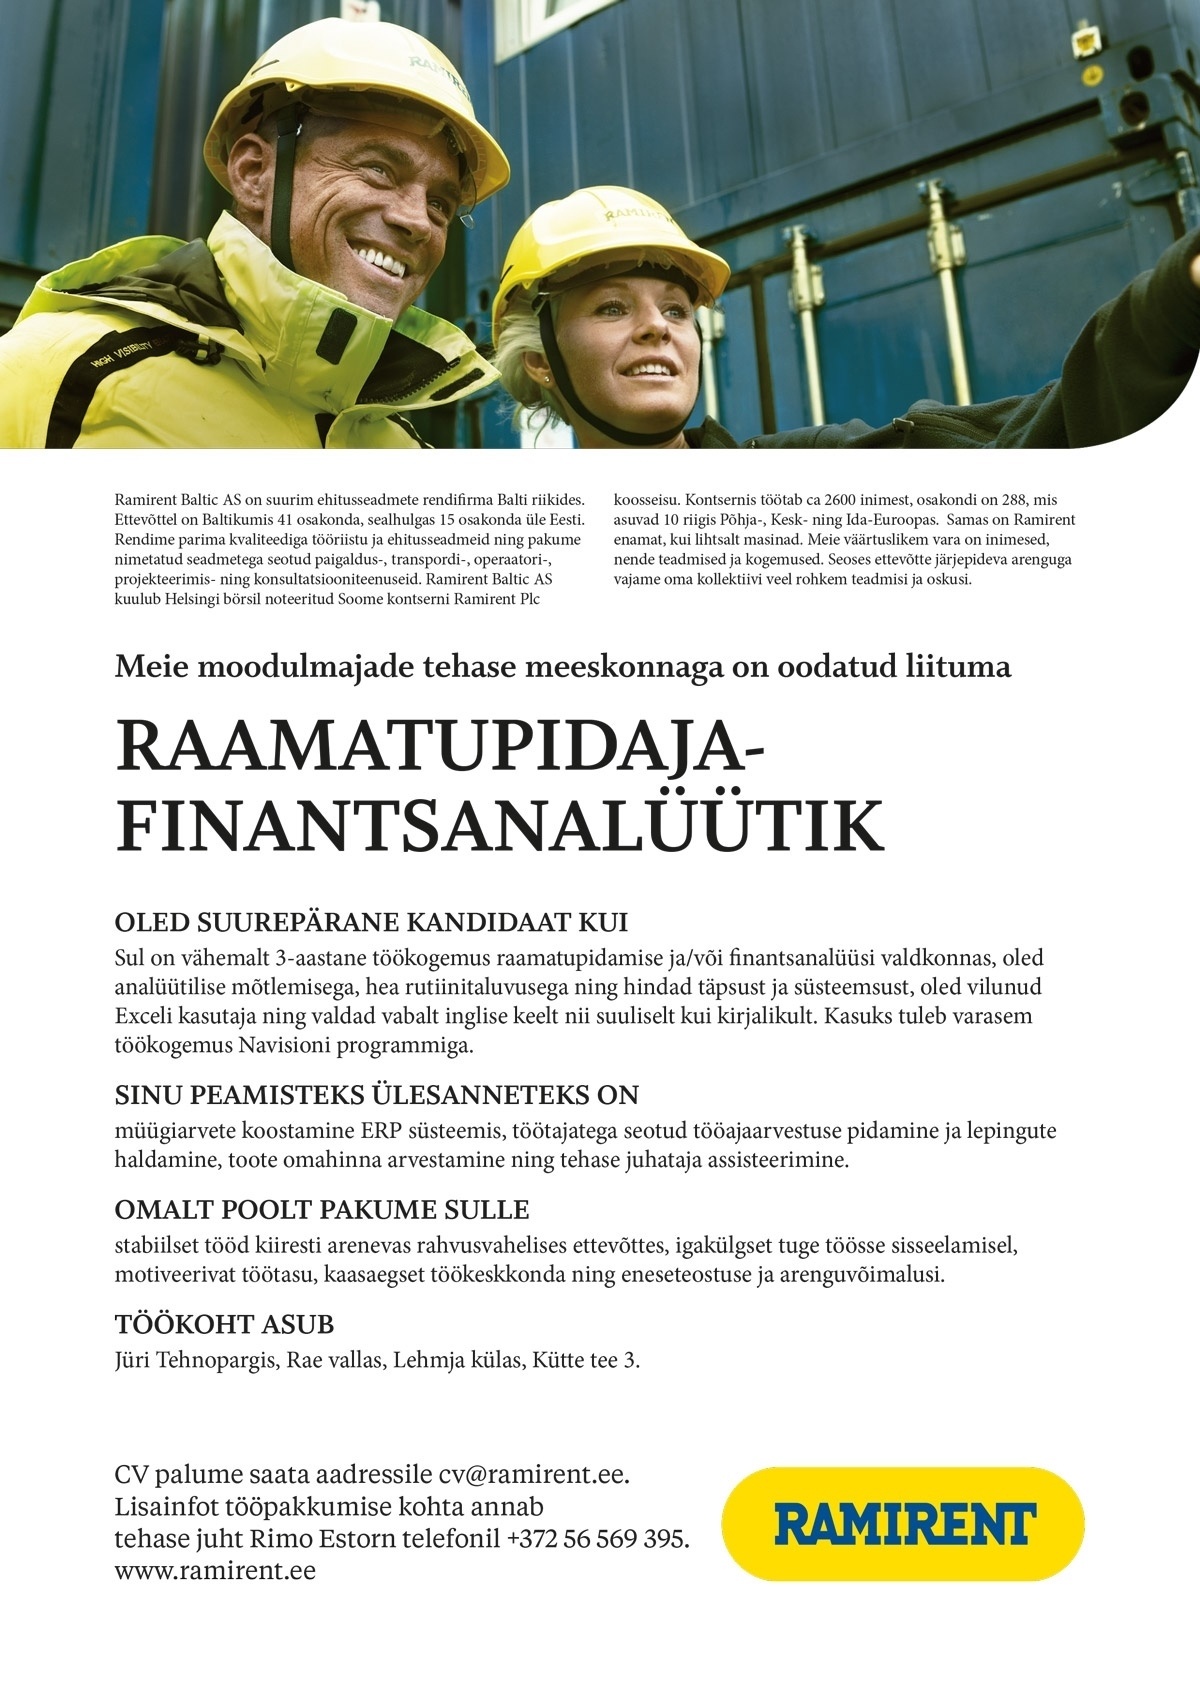 Ramirent Baltic AS Raamatupidaja - finantsanalüütik